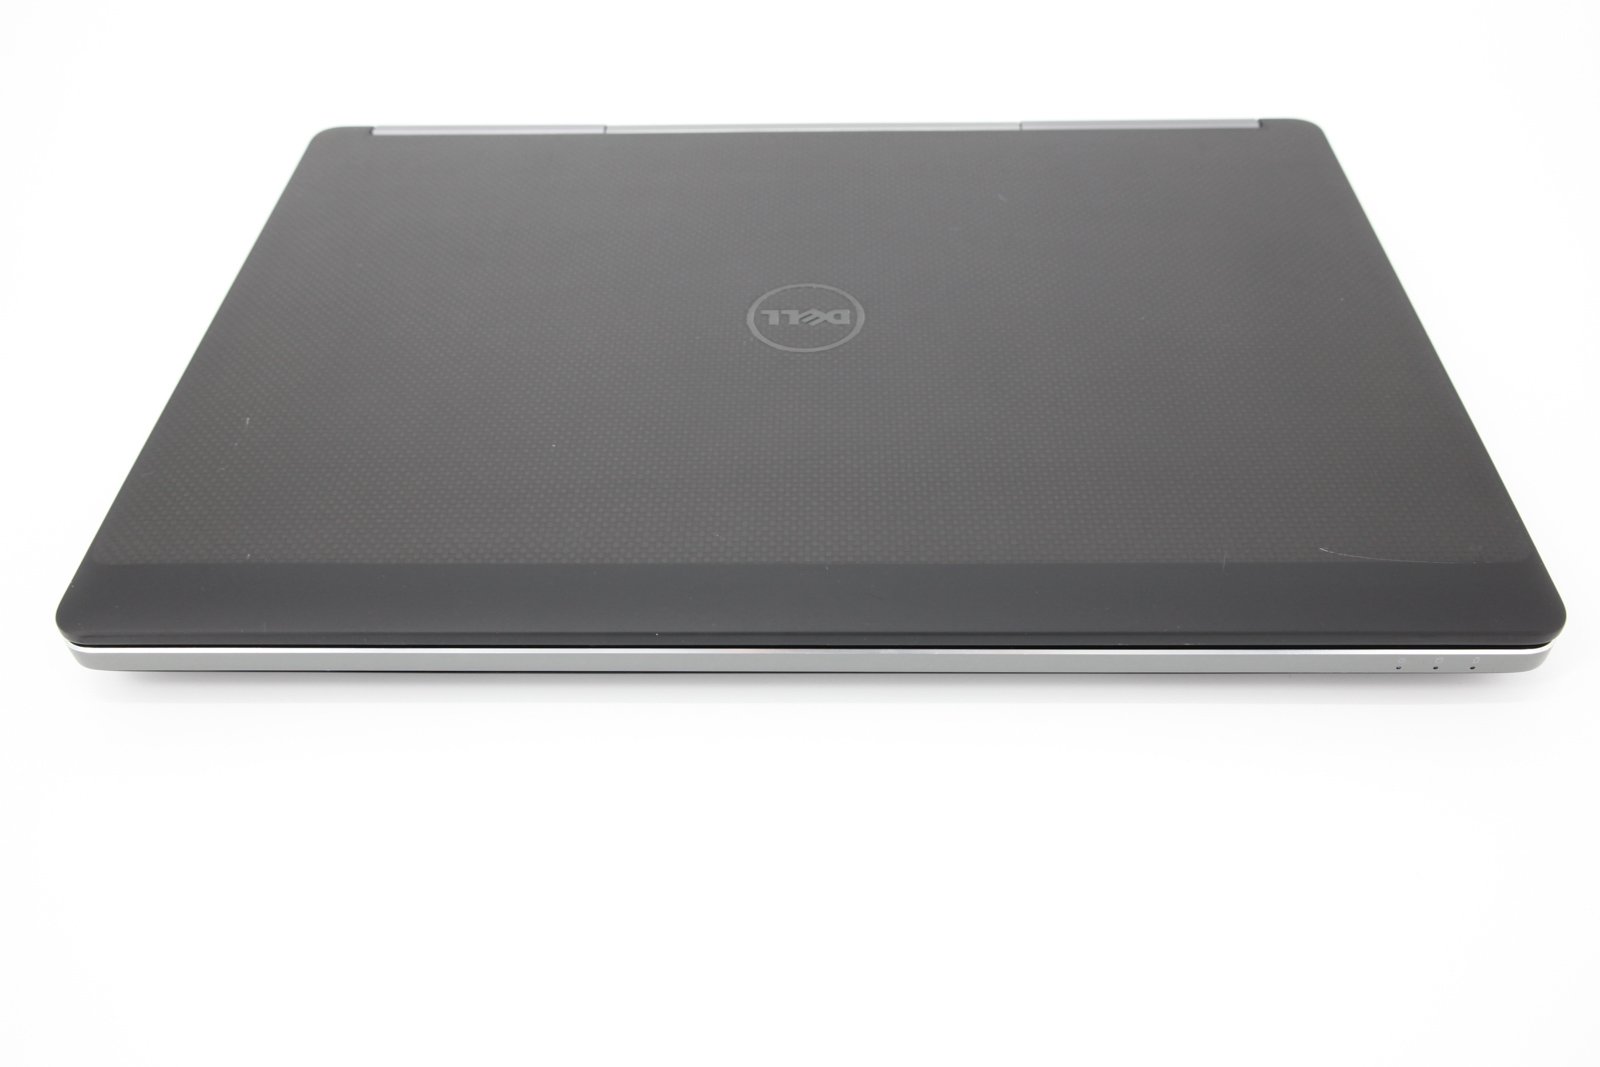 Dell Precision 7710 17.3" Laptop: i7 6820HQ, 16GB RAM, 512GB SSD, Warranty VAT - CruiseTech